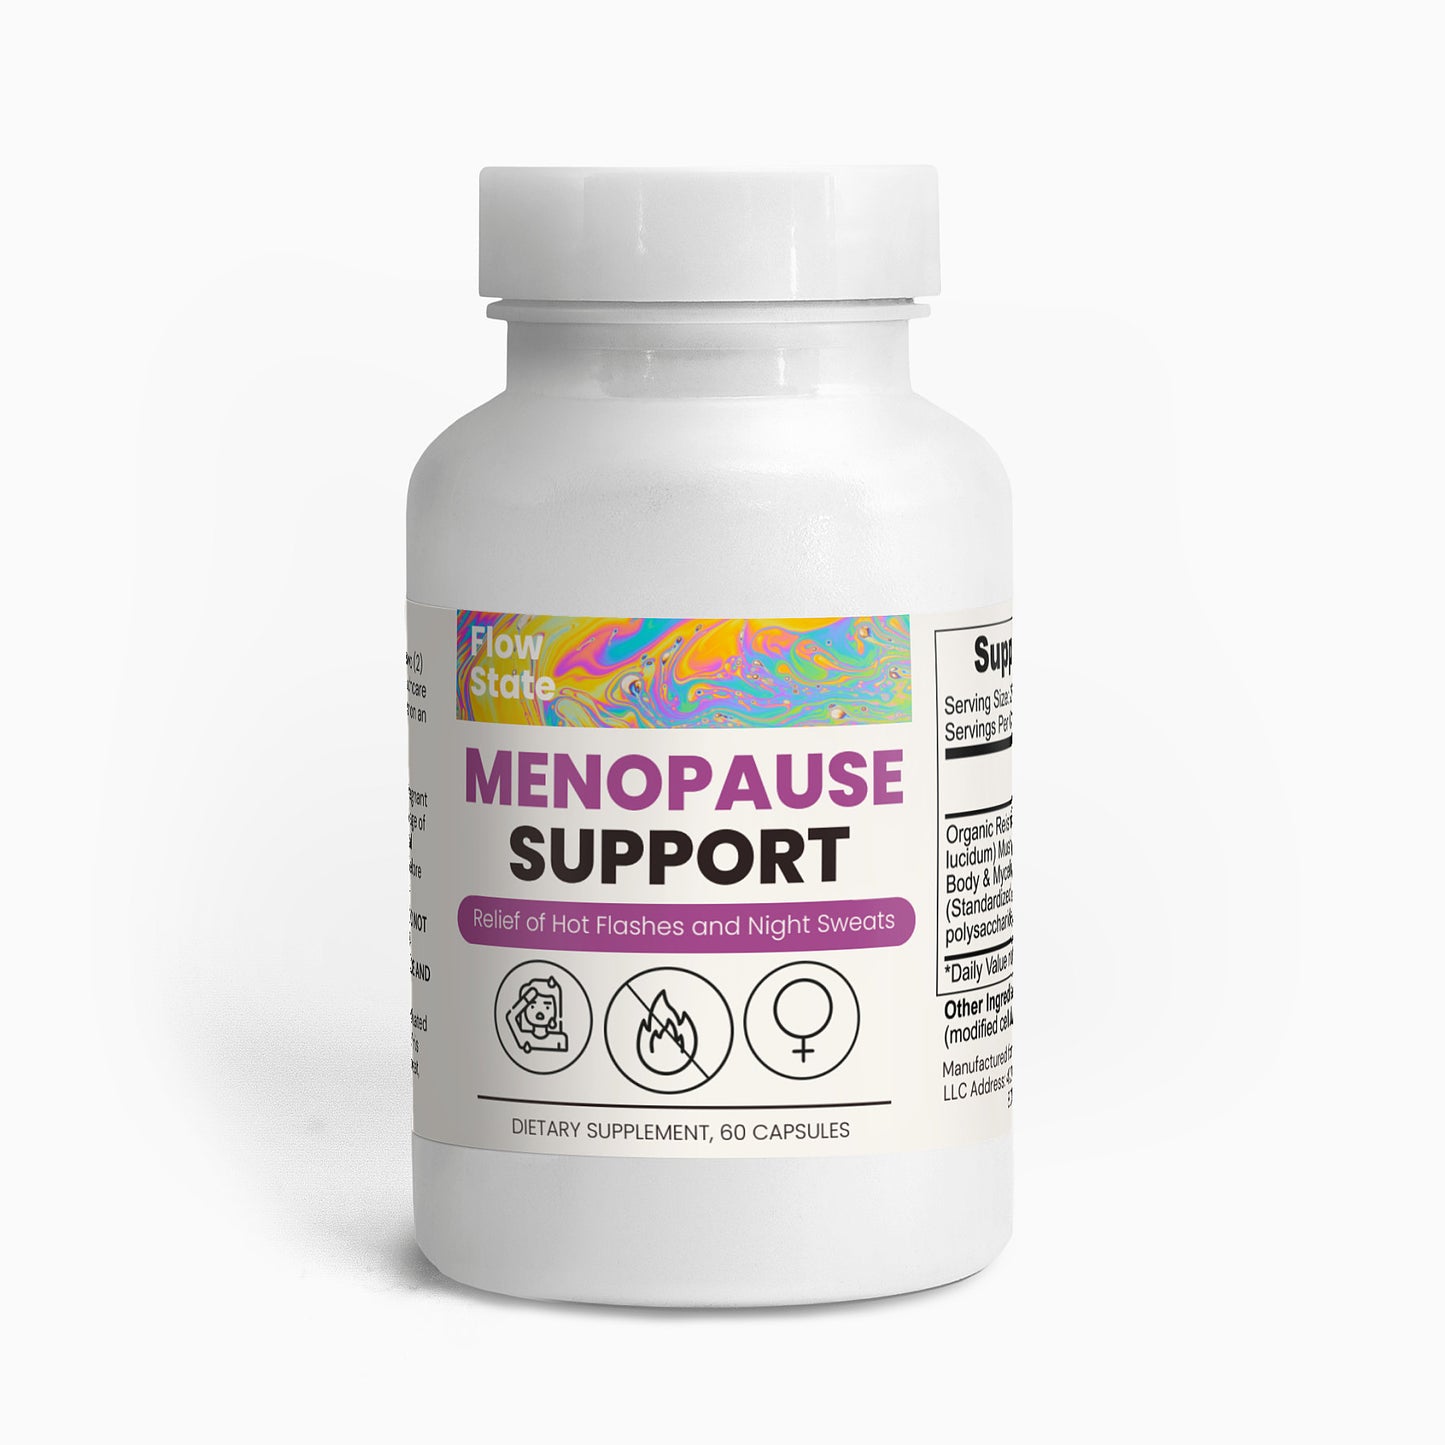 MENOPAUSE SUPPORT